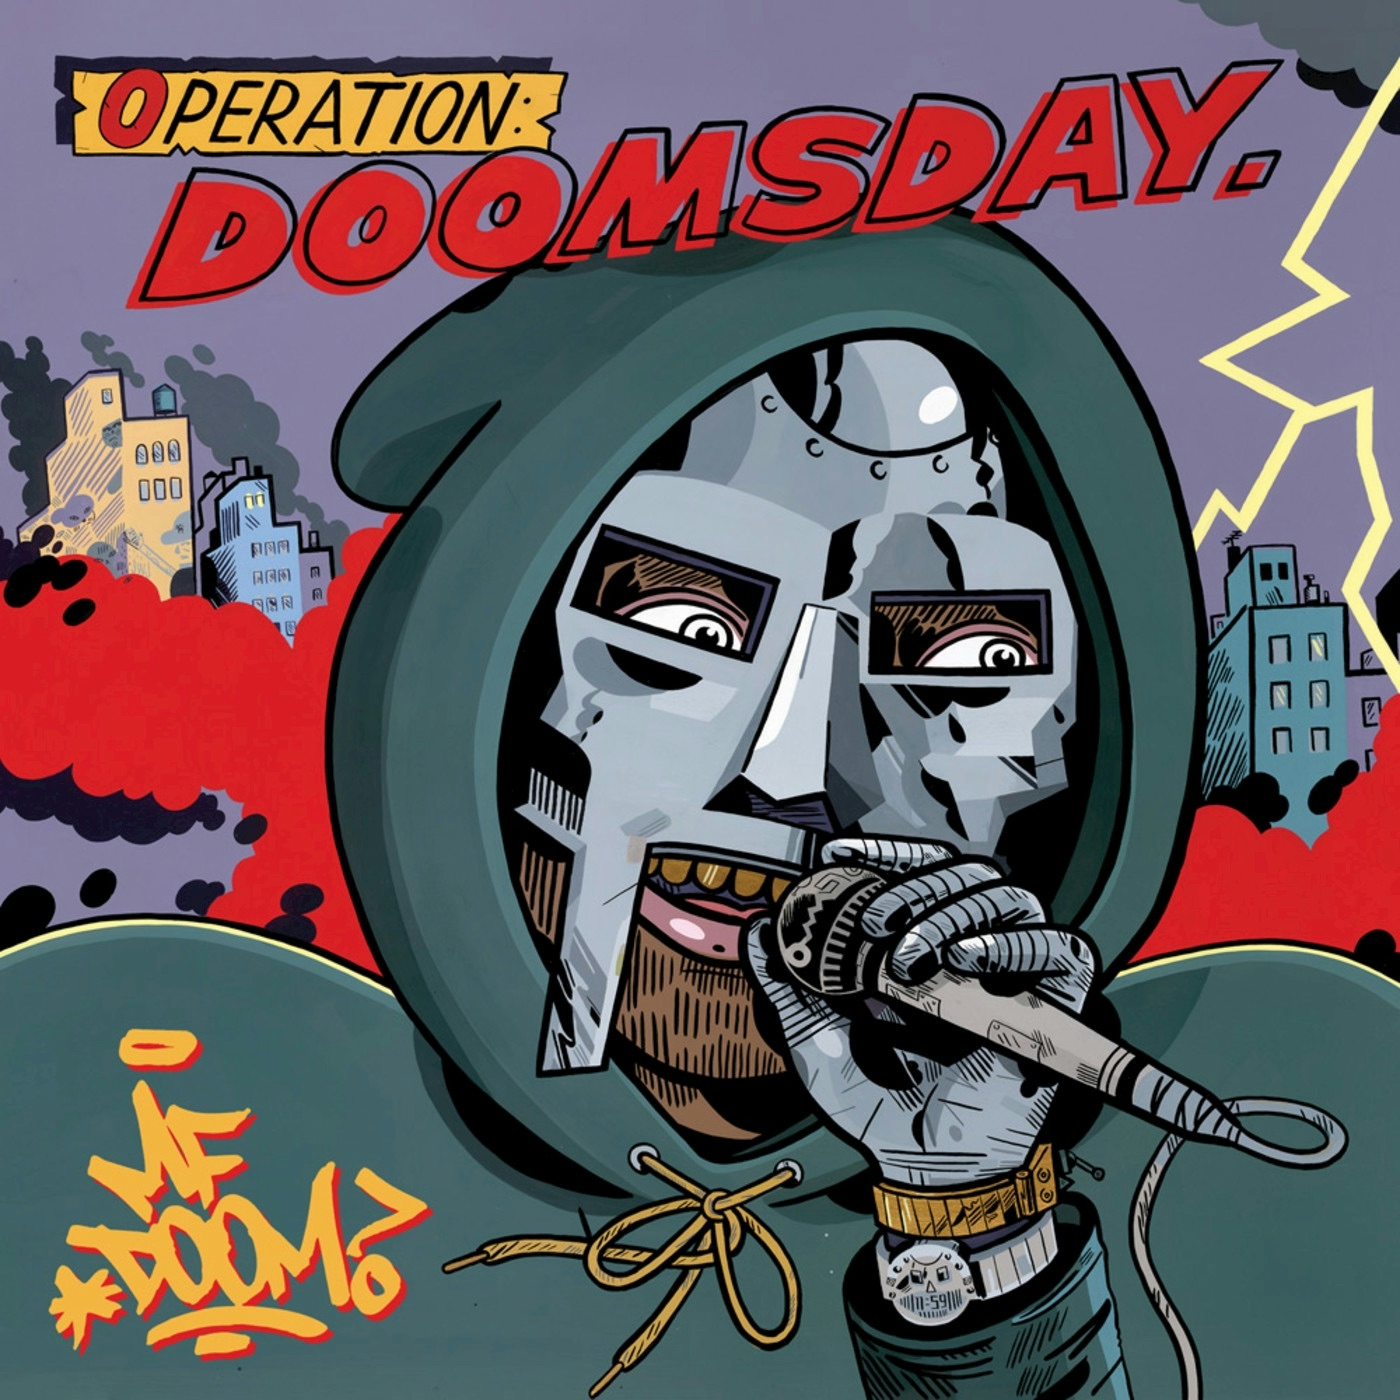 Album artwork for Album artwork for Operation Doomsday by MF DOOM by Operation Doomsday - MF DOOM